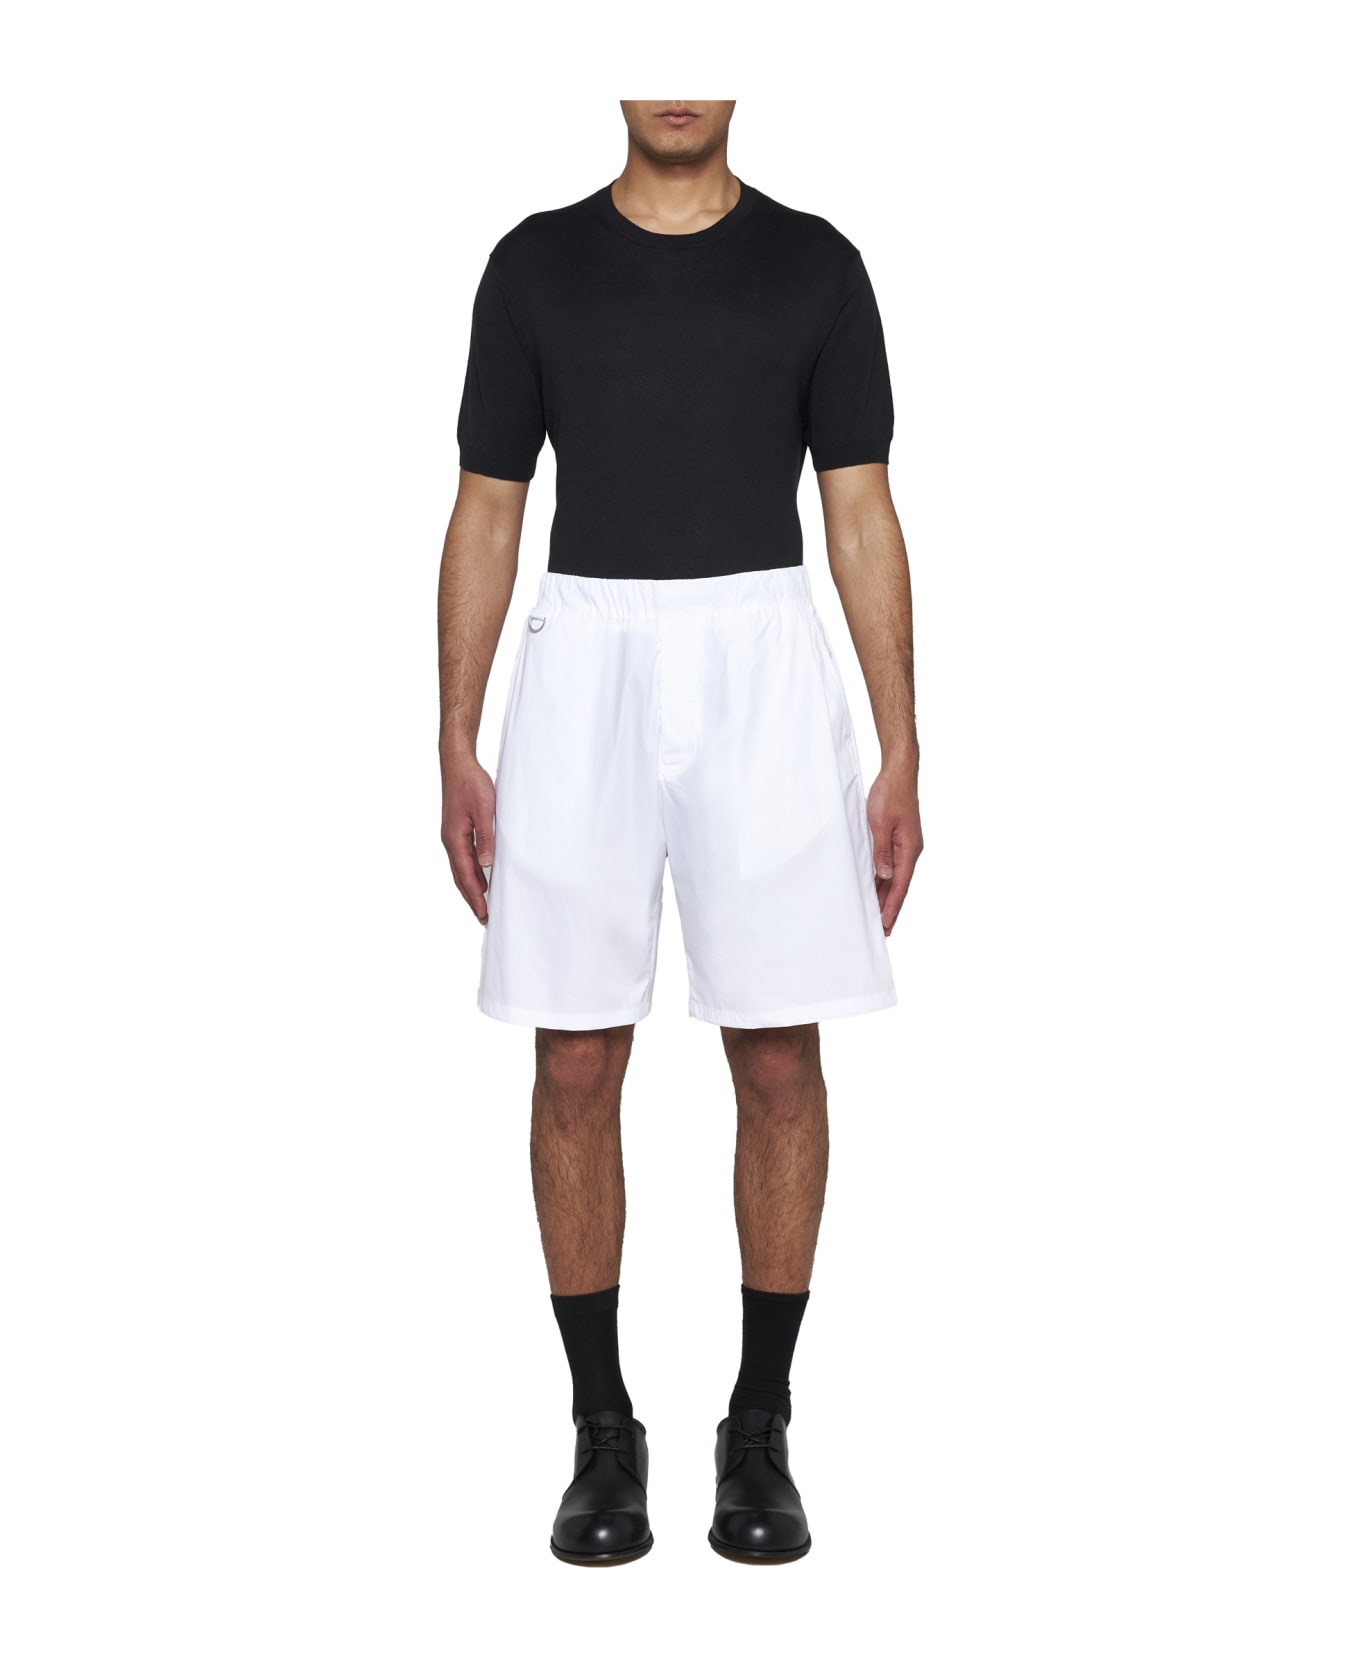 Low Brand Shorts - White ショートパンツ